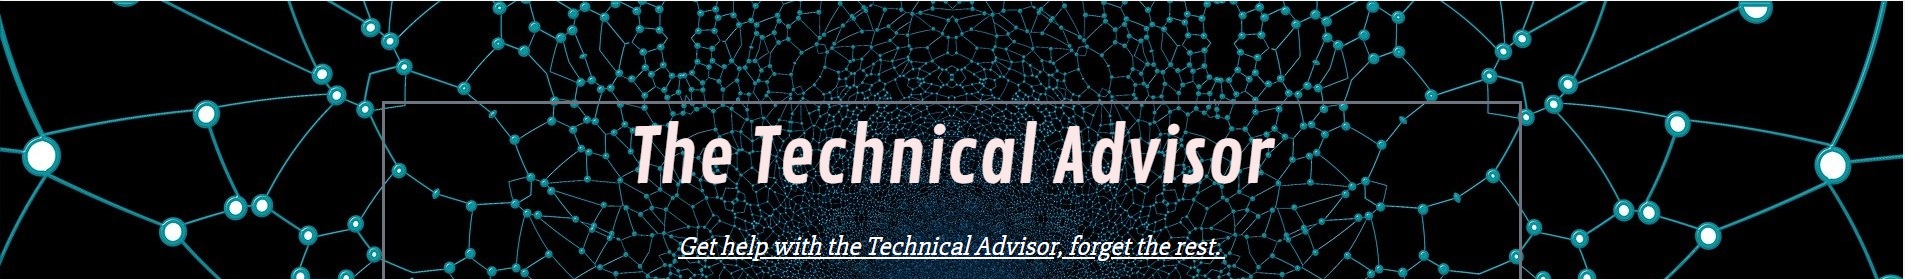 The Technical Advisor